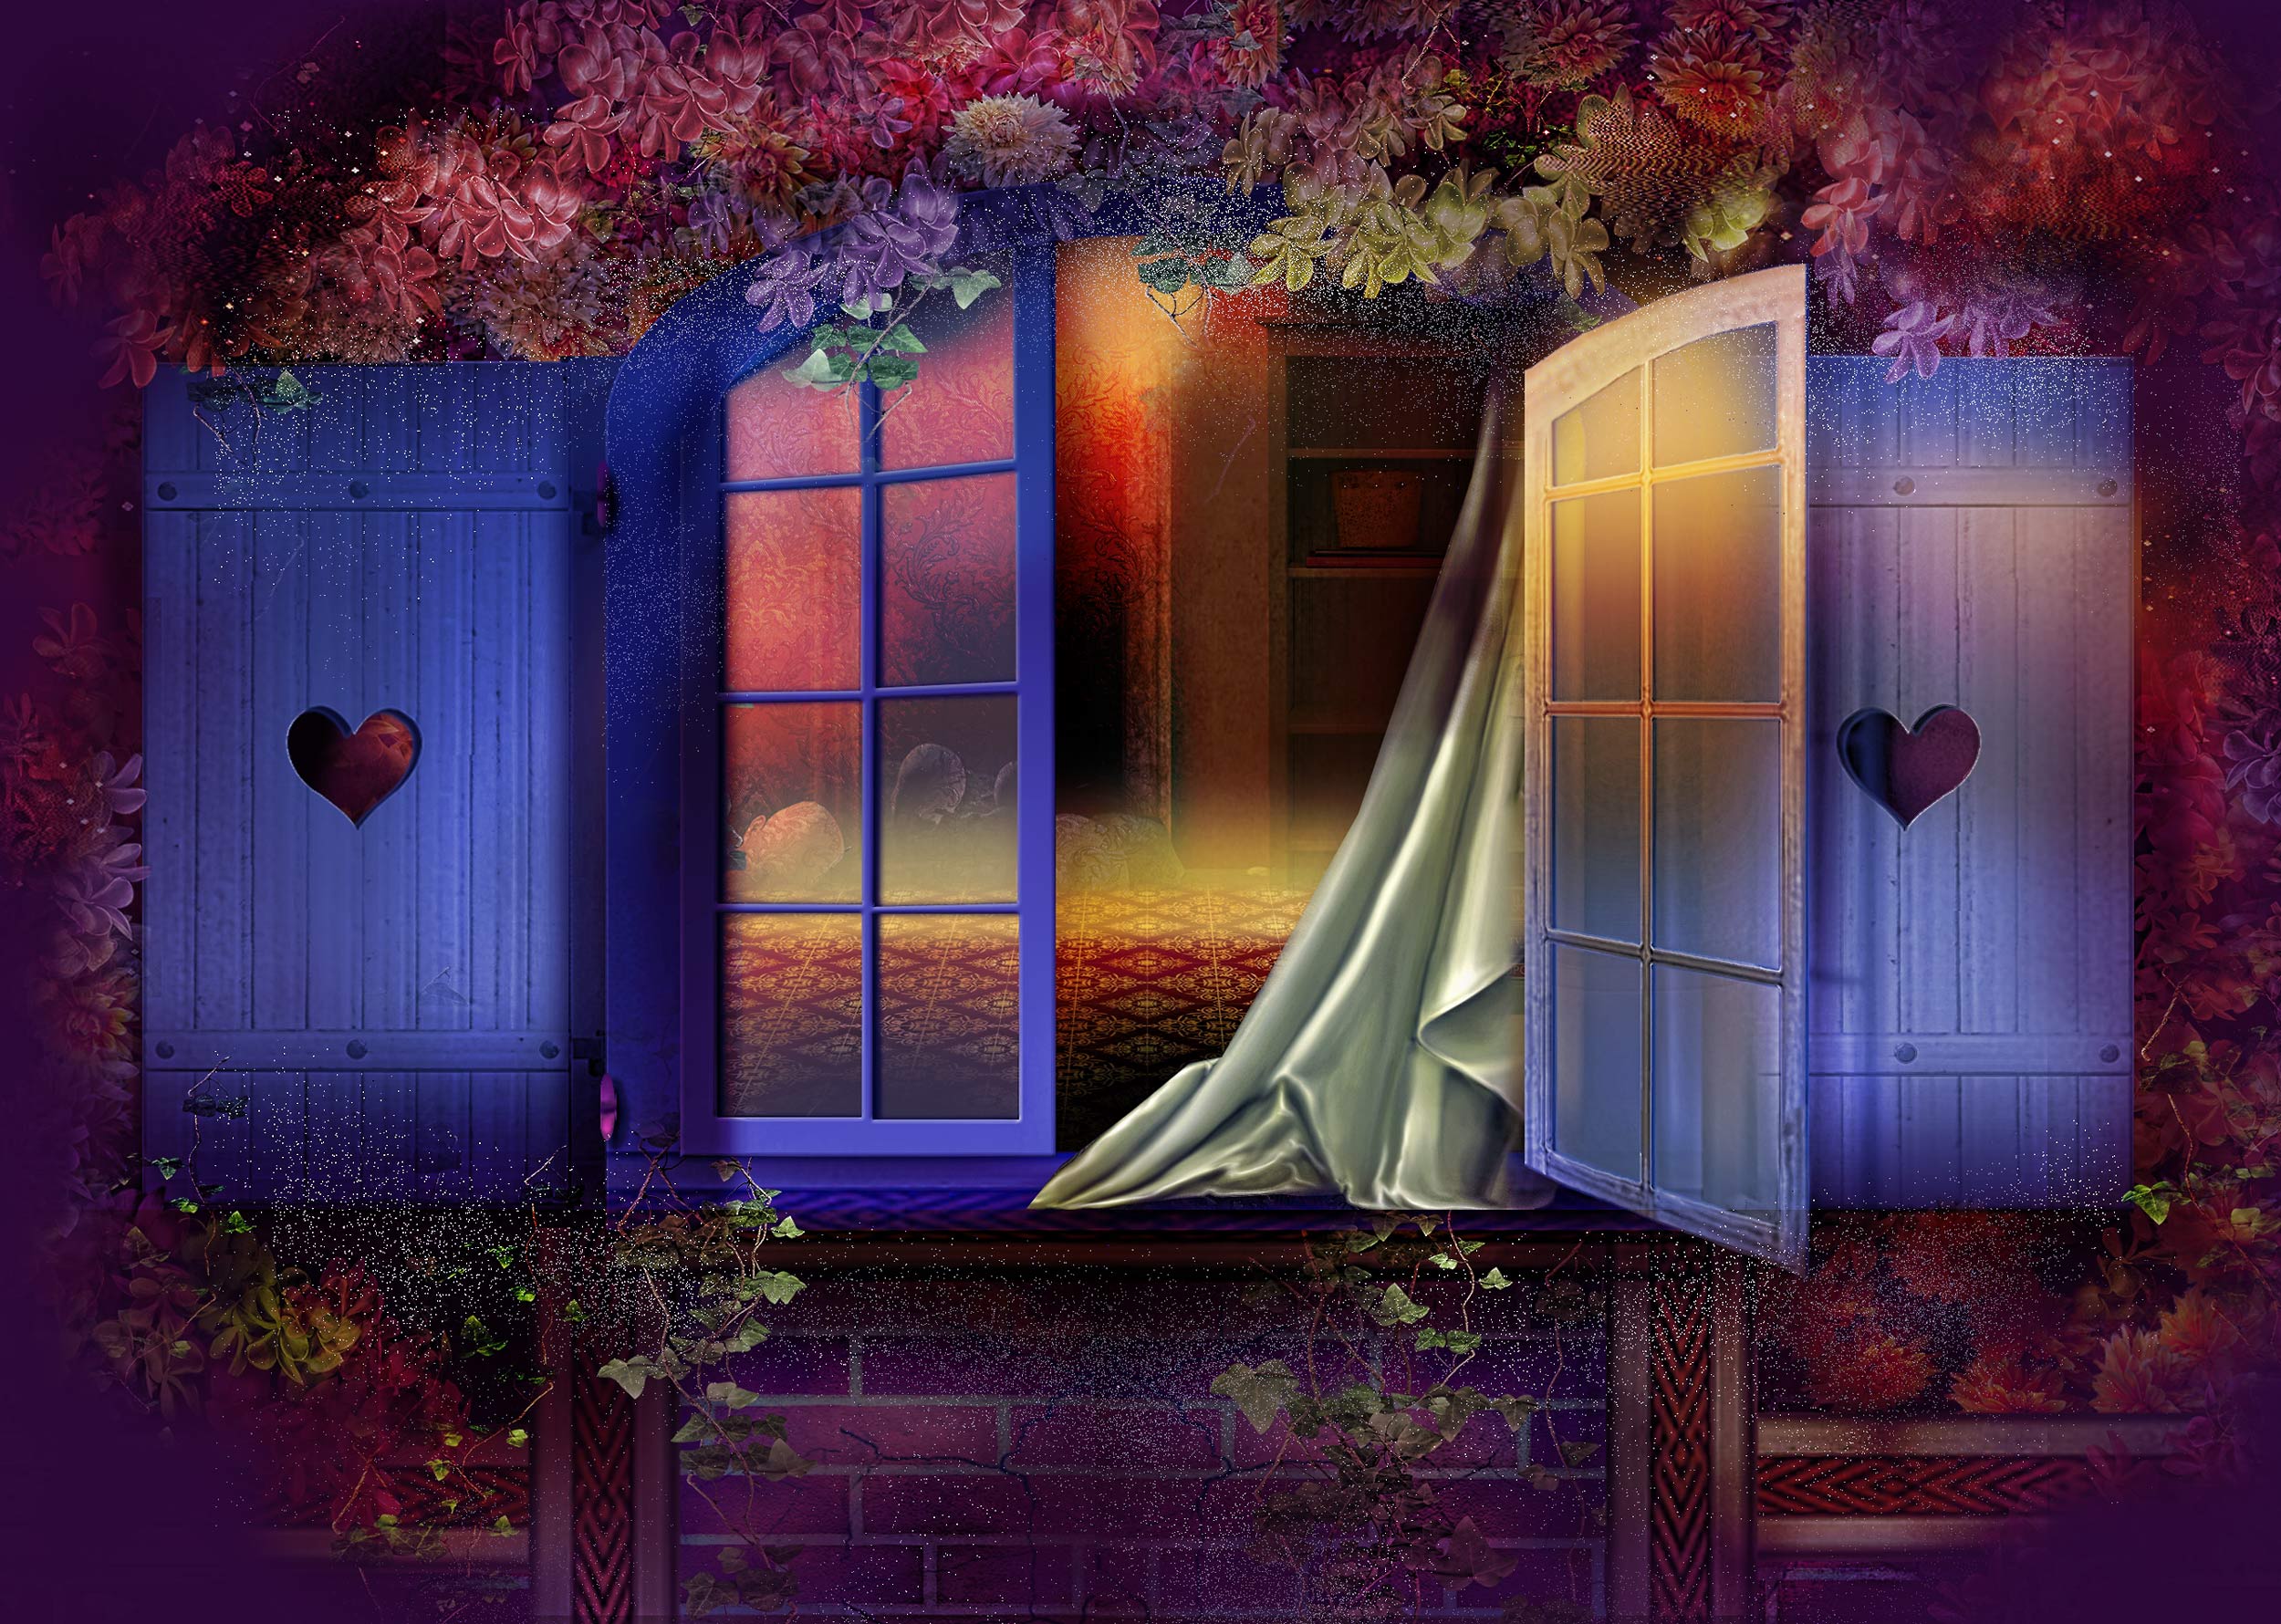 spring, artistic, window, heart, night, shutters, vine